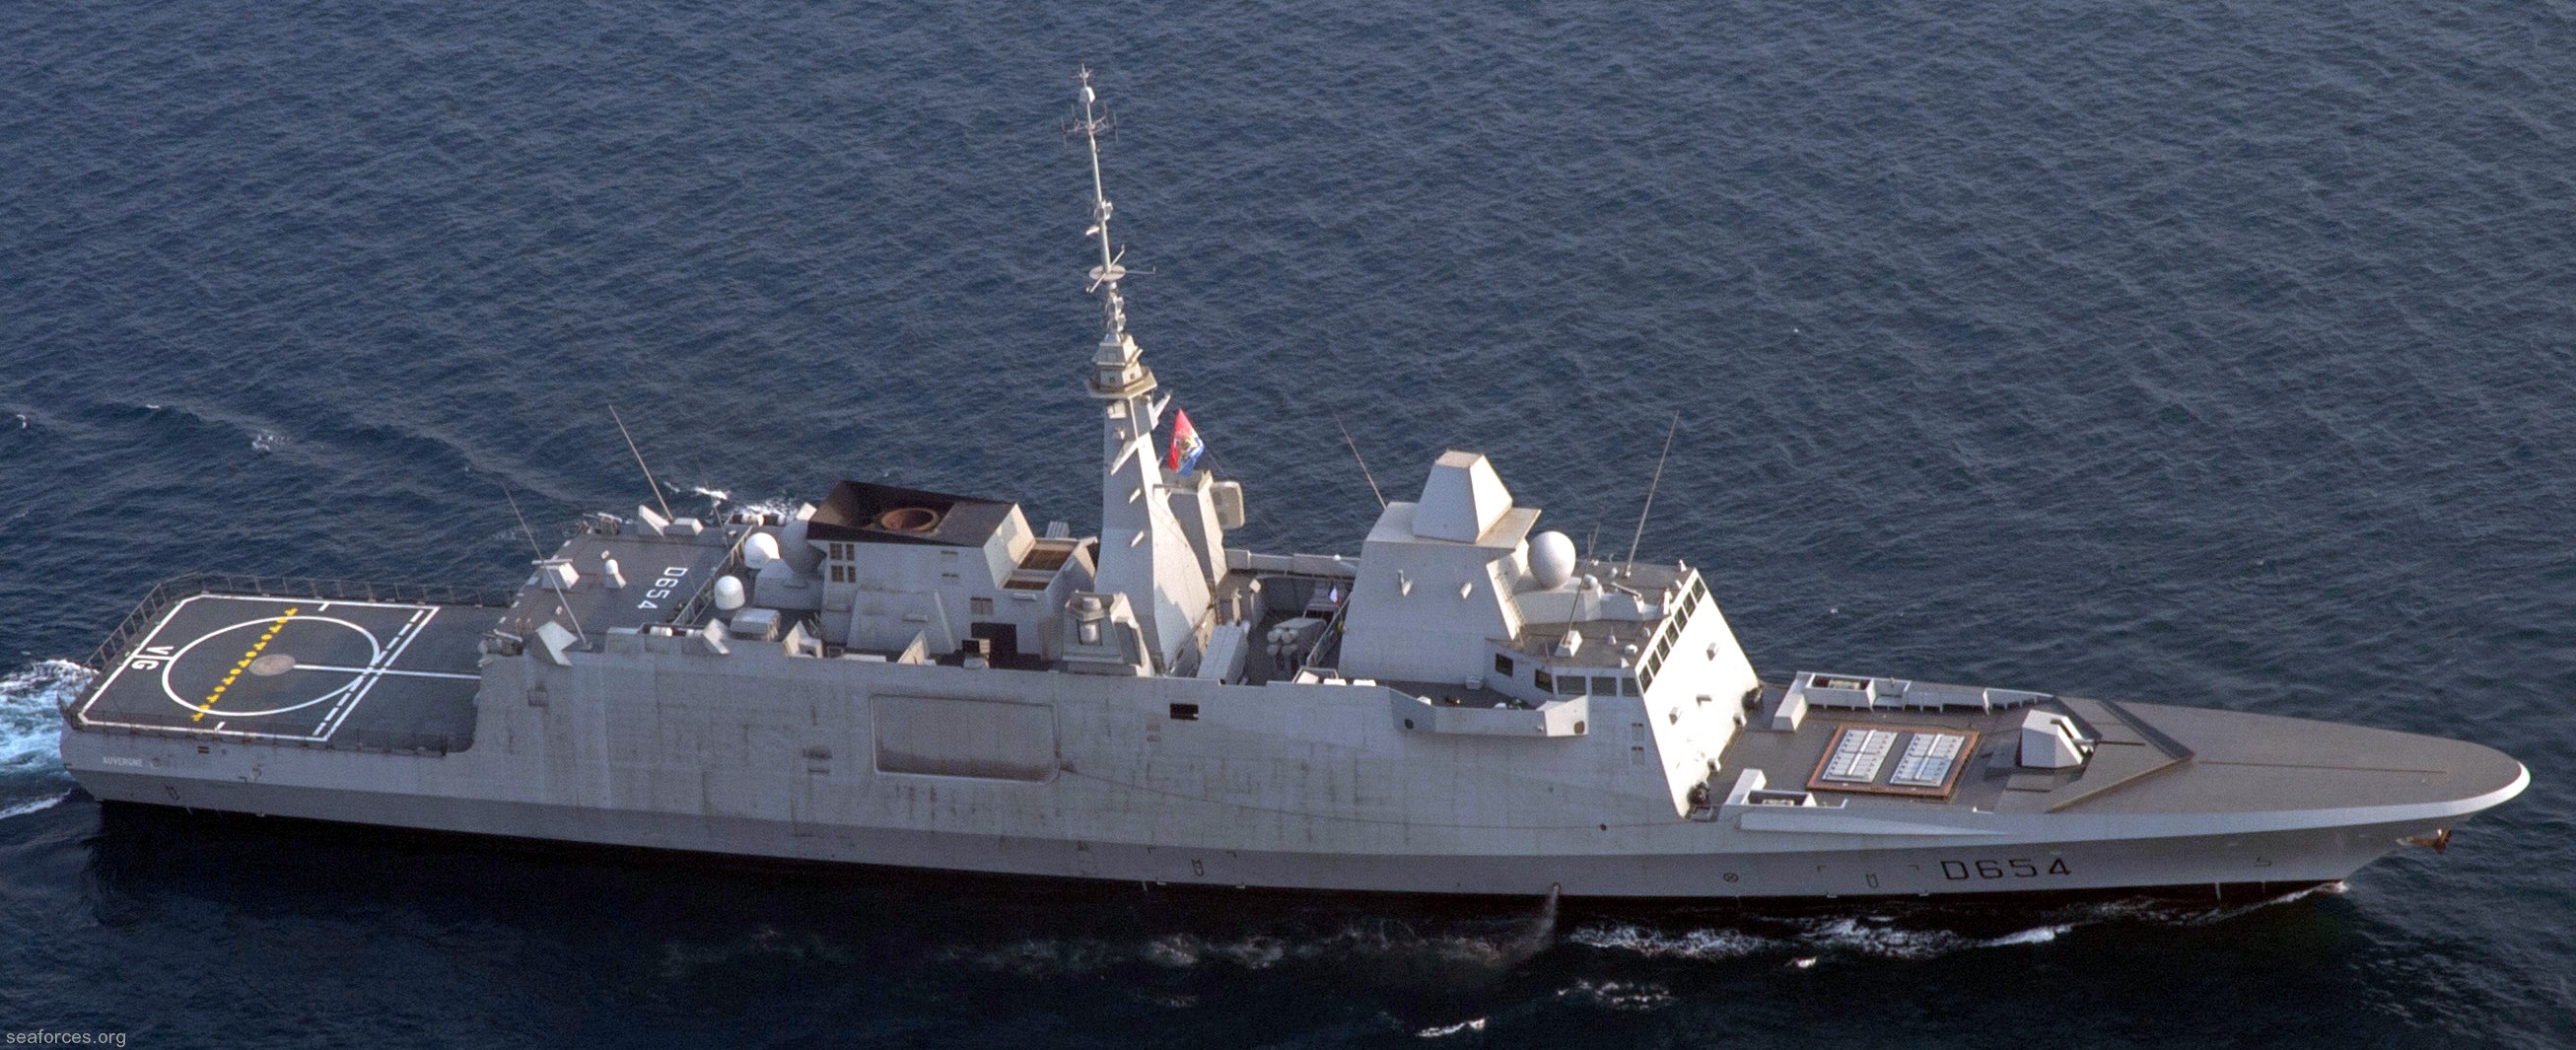 d-654 fs auvergne fremm aquitaine class frigate fregate multi purpose french navy marine nationale 02